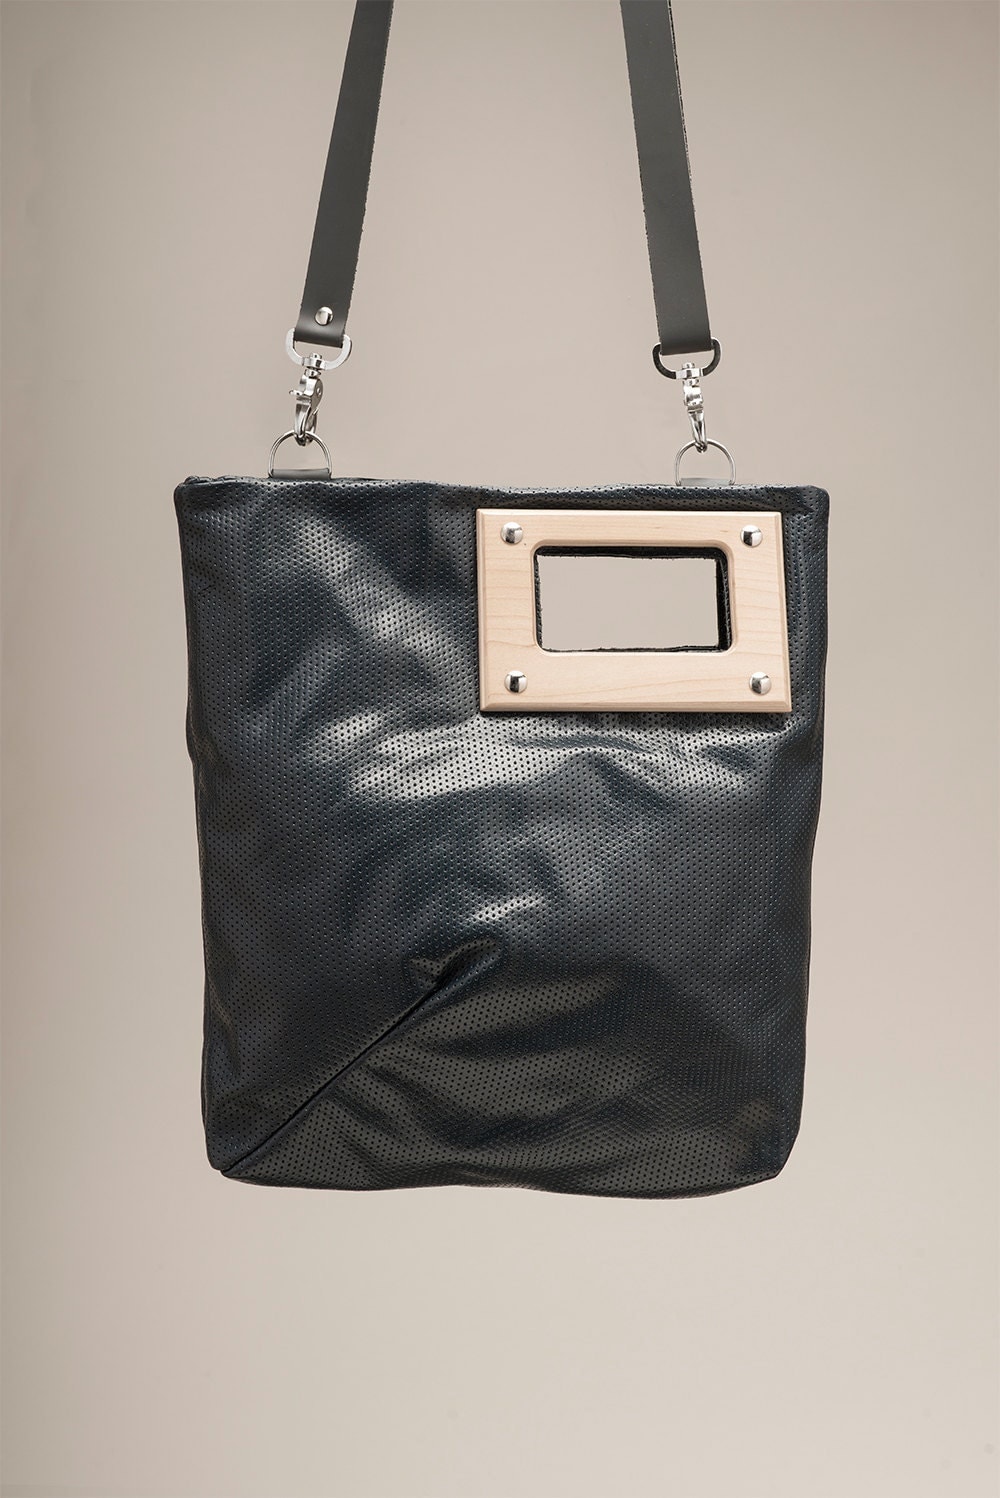 SALE Navy Blue leather handbag leather purse crossbody by VEINAGE